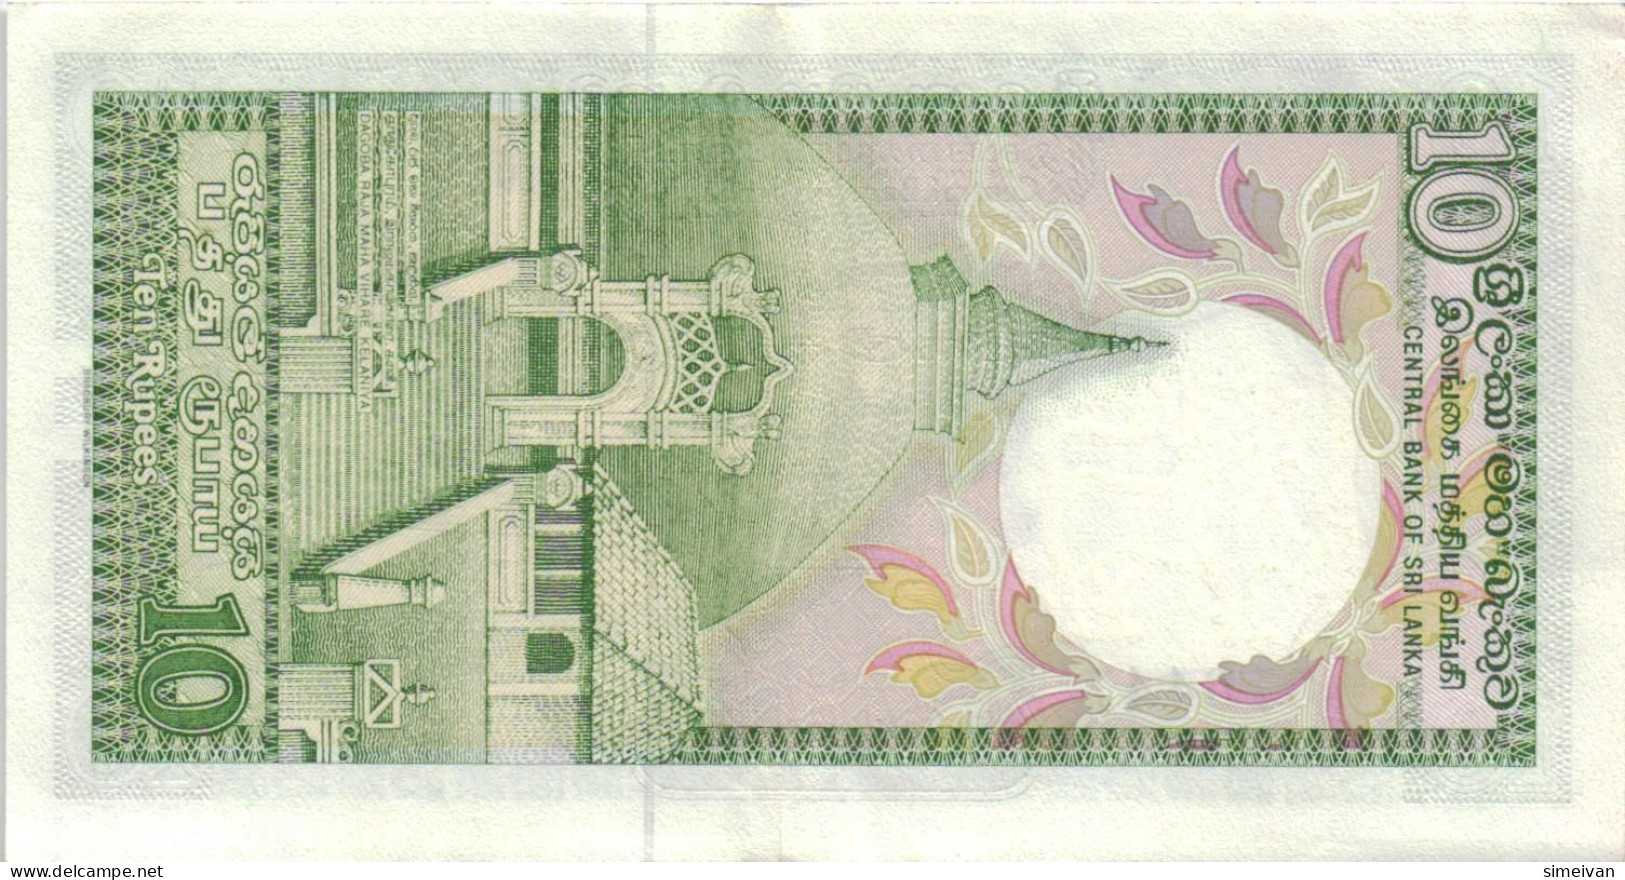 Sri Lanka 10 Rupees 1989 P-96c #4809 - Sri Lanka